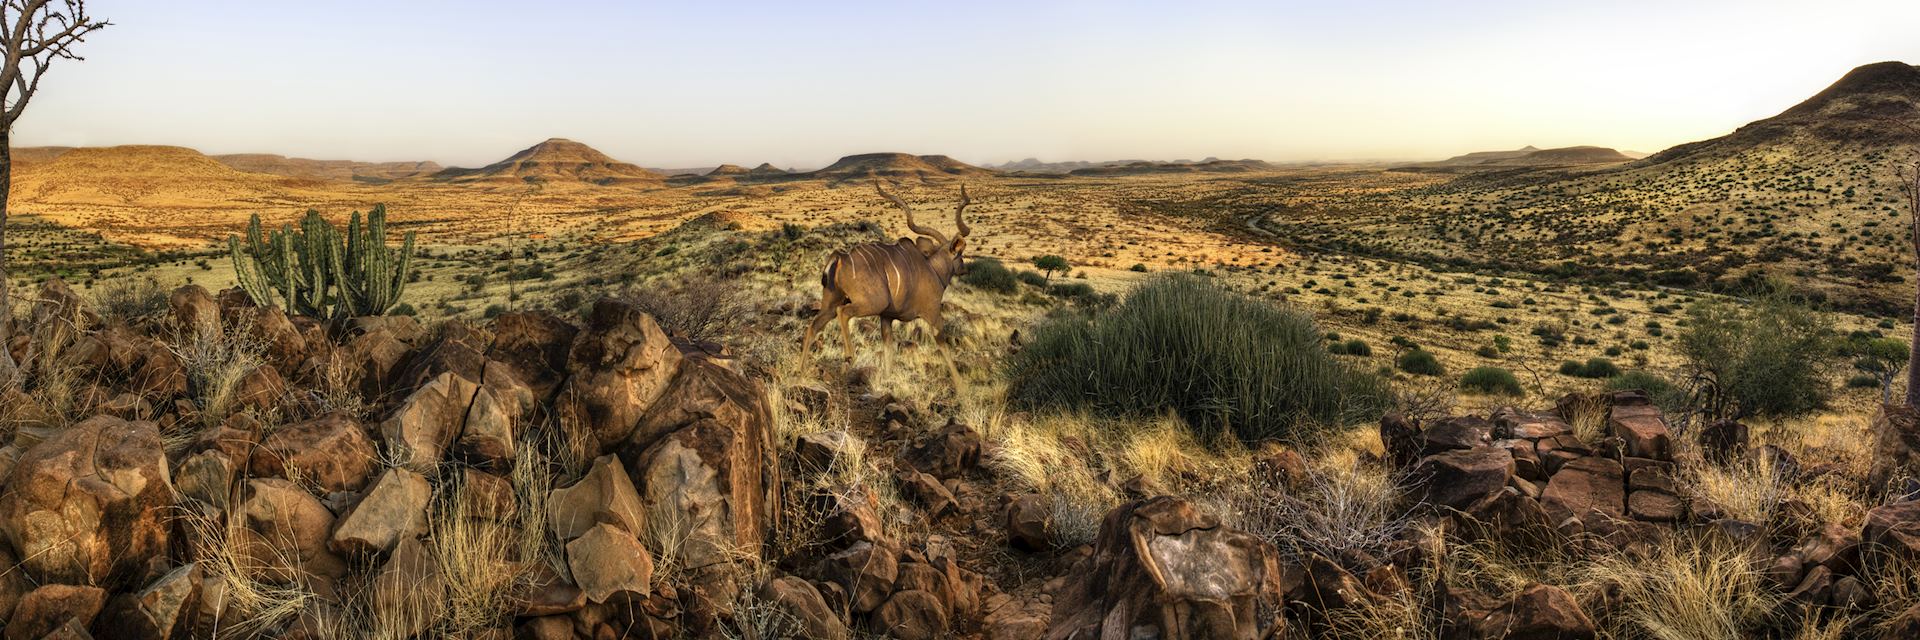 Kudu in Damaraland in Namibia